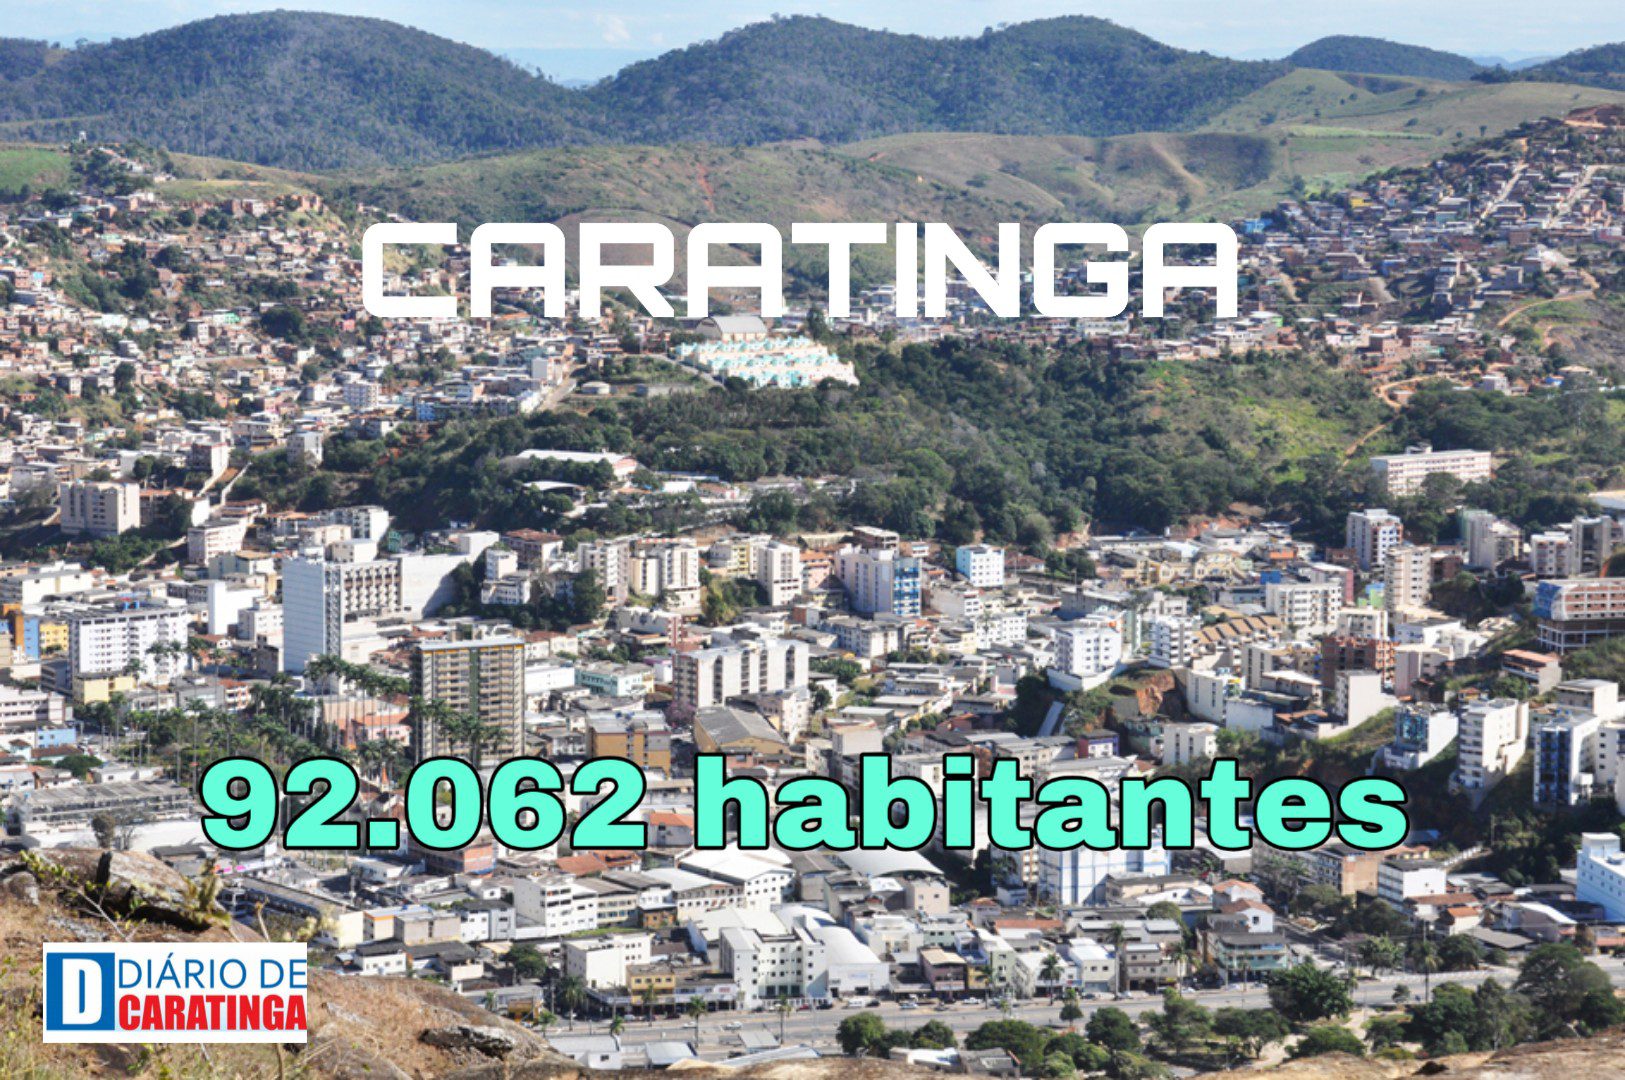 Caratinga tem 92.062 habitantes